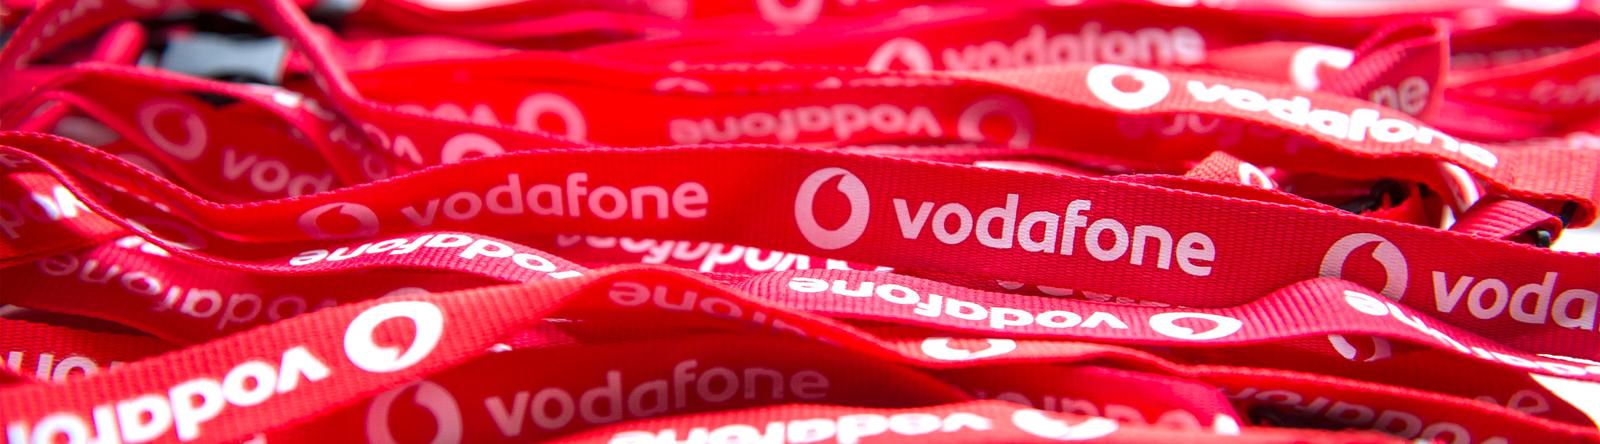 Vodafone - Header image - Media Contact us